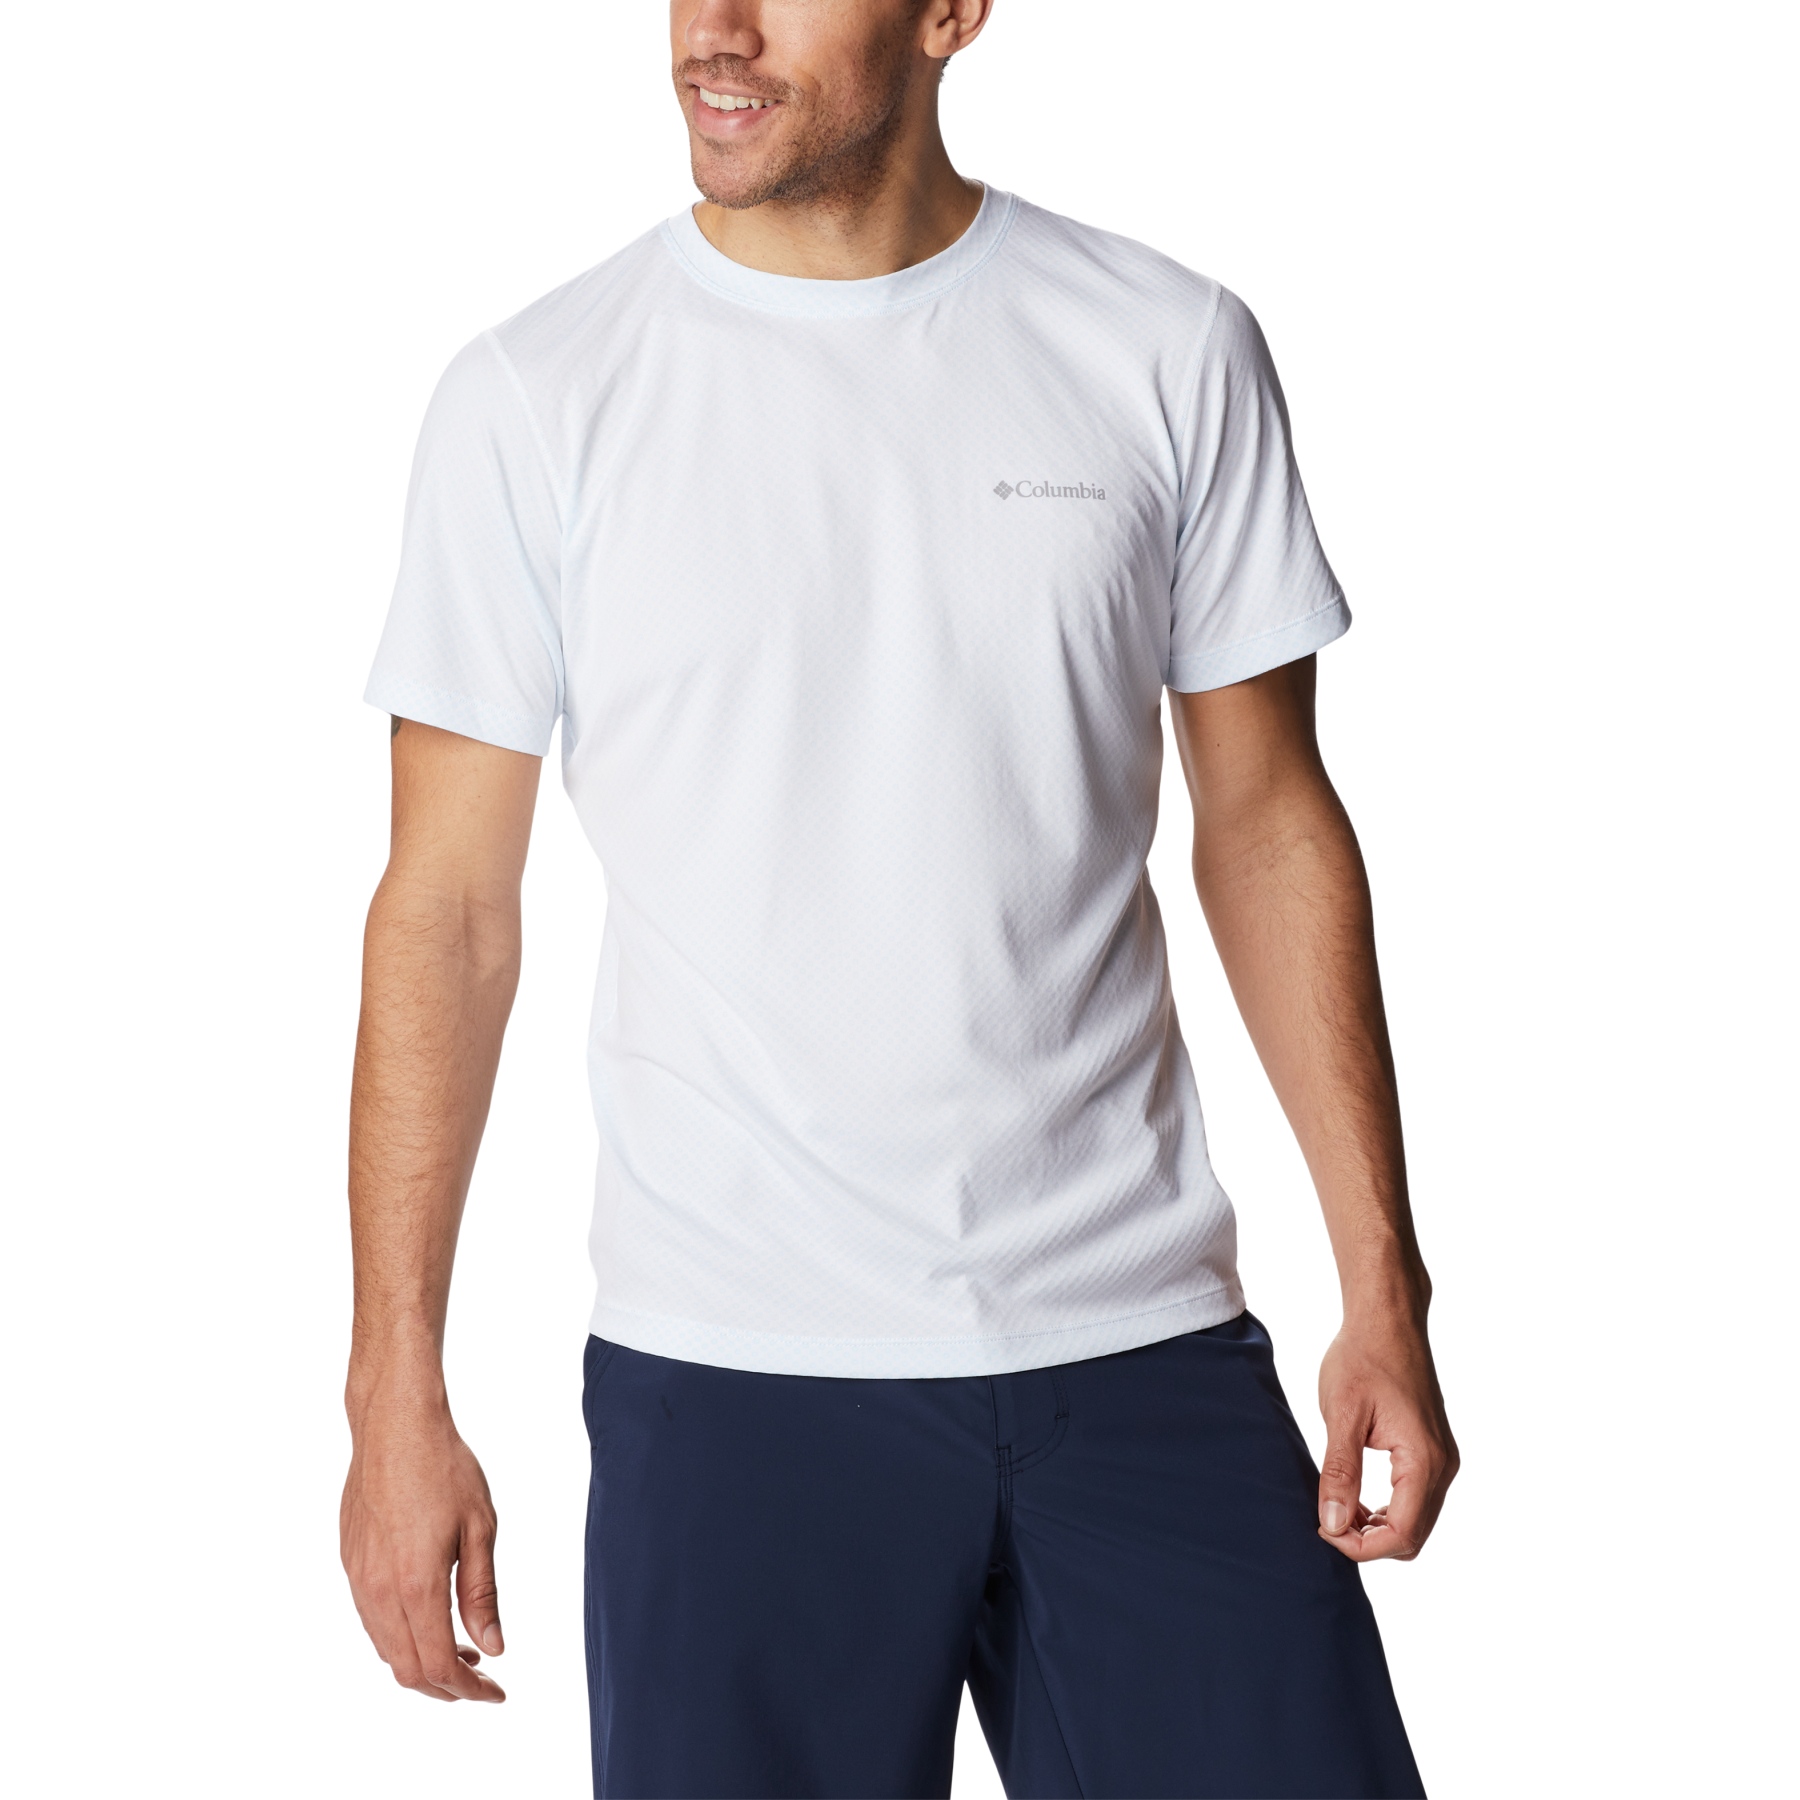 Image of Columbia Zero Rules T-Shirt Men - White